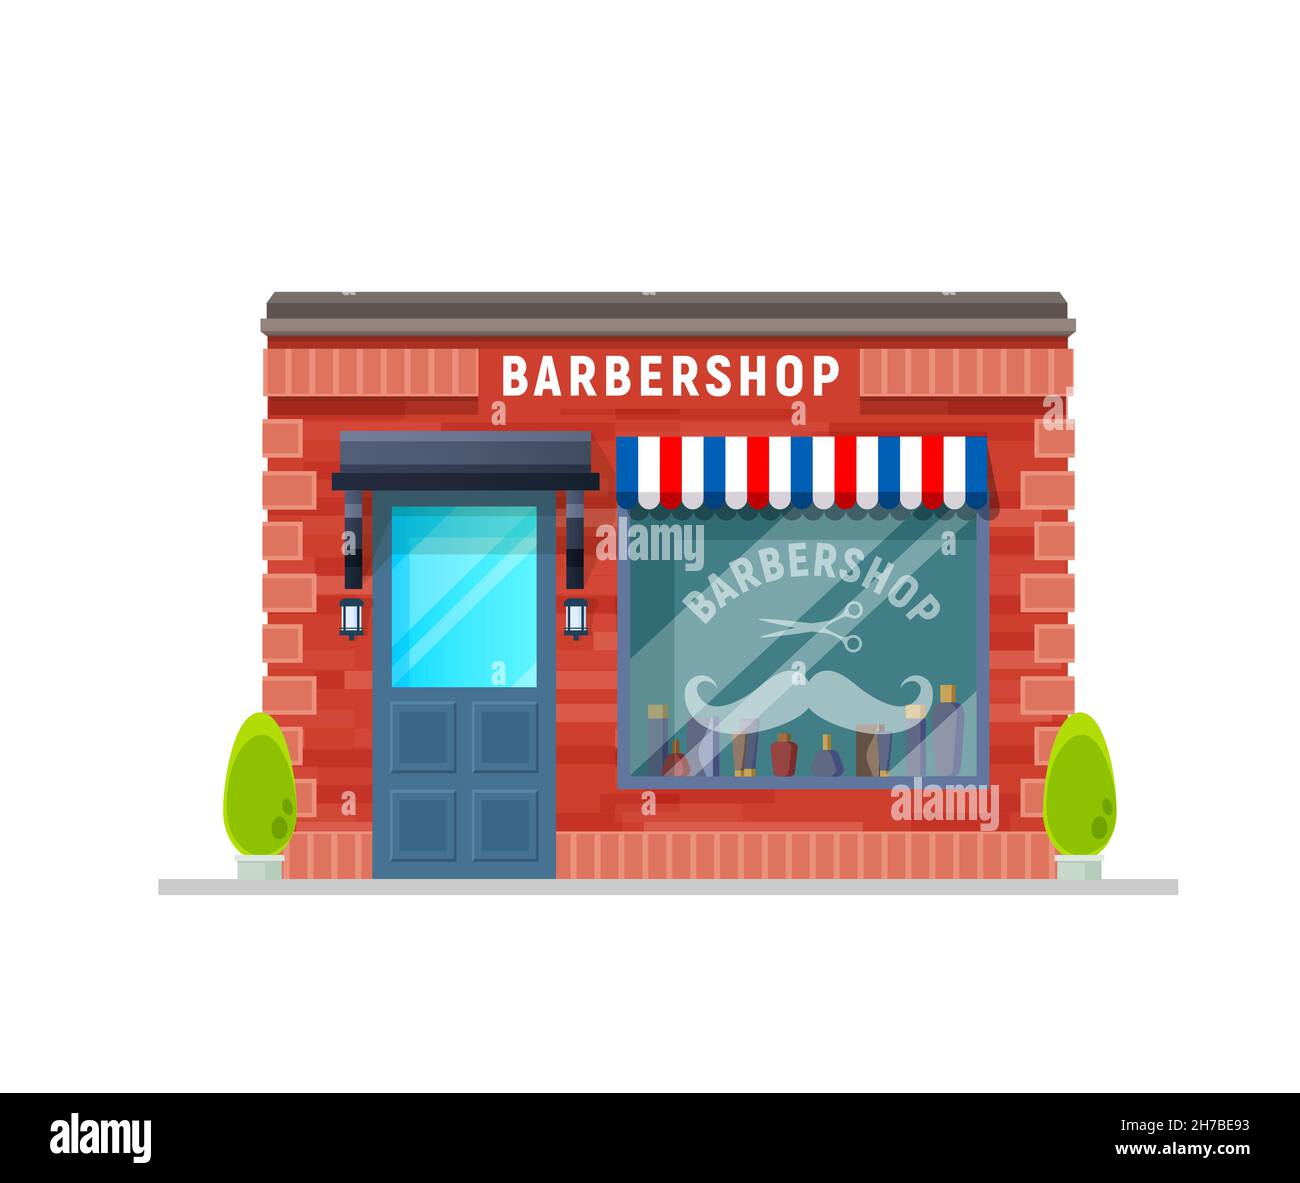 Barber Shop Exterior Images – Browse 1,337 Stock Photos, Vectors